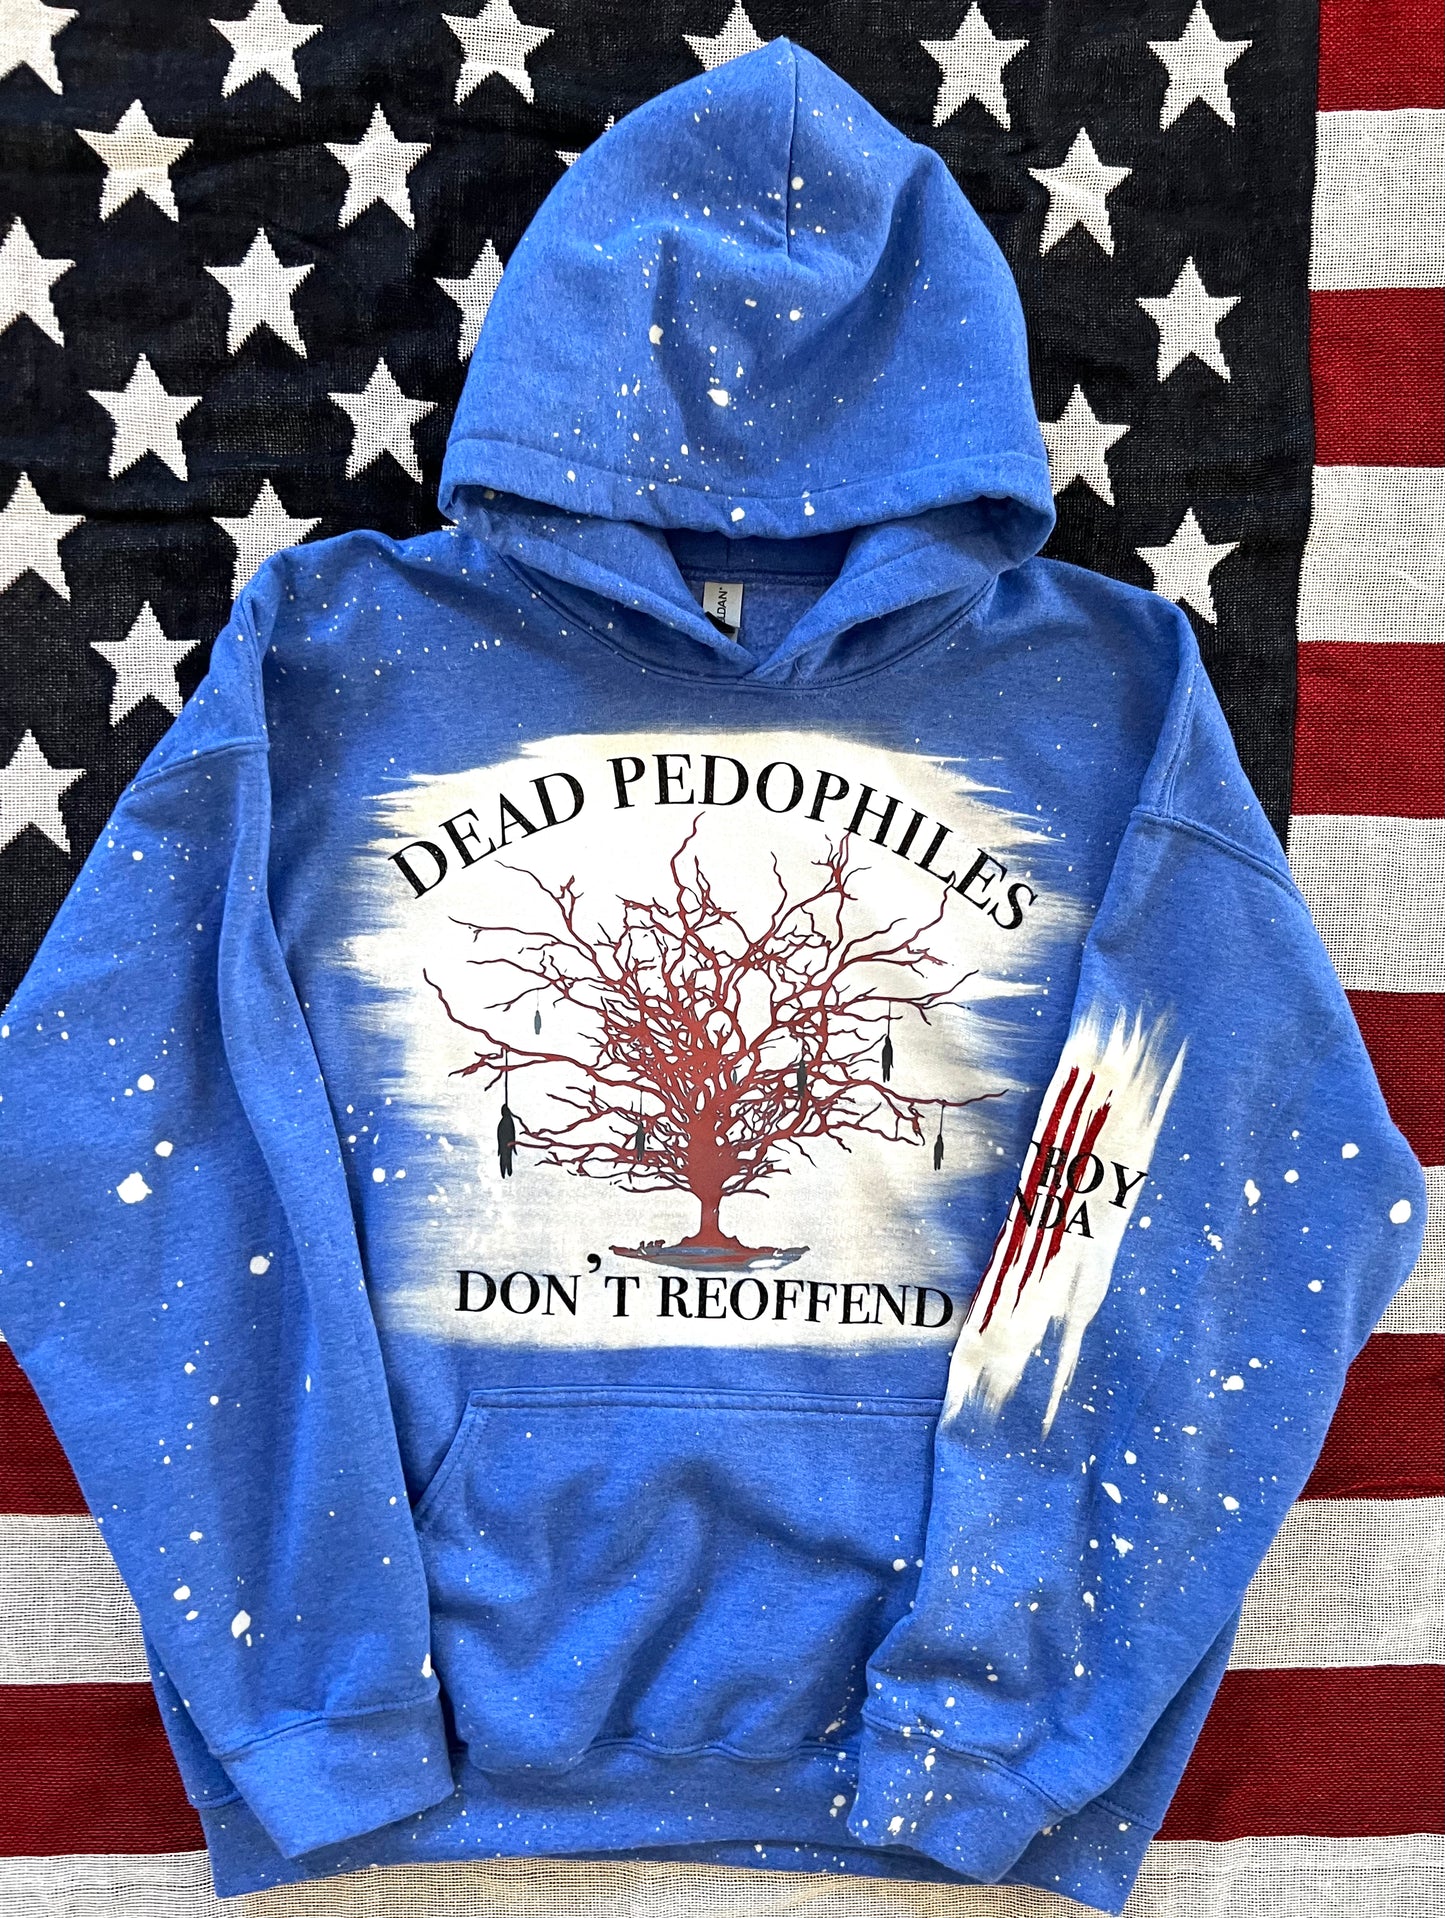 Dead Pedophiles Don't Reoffend